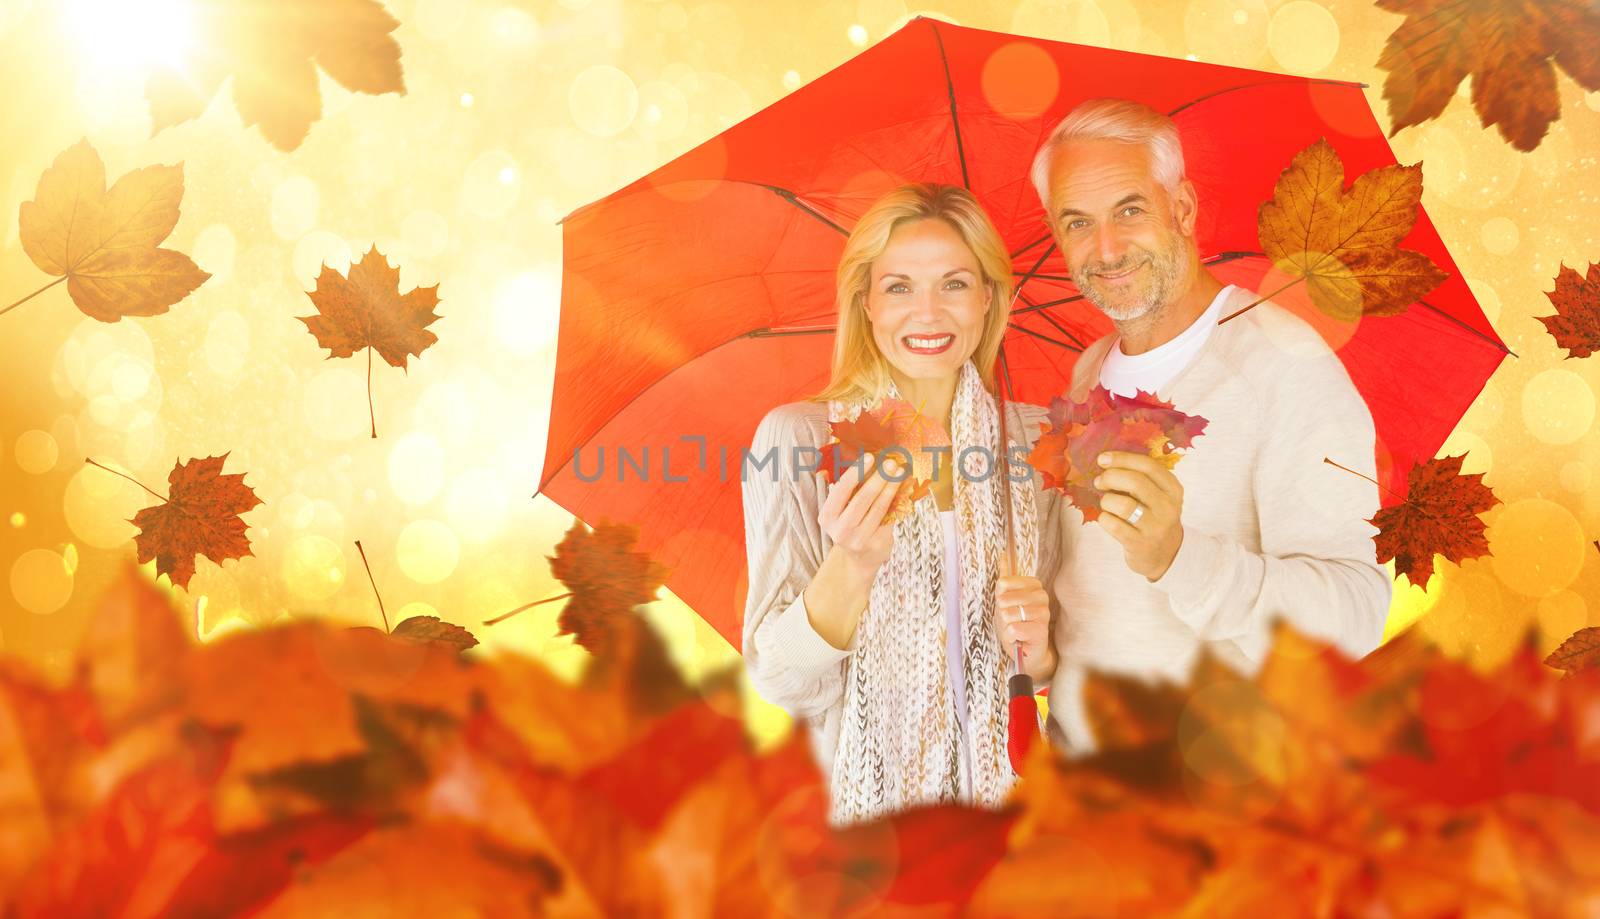 Composite image of portrait of happy couple under red umbrella by Wavebreakmedia